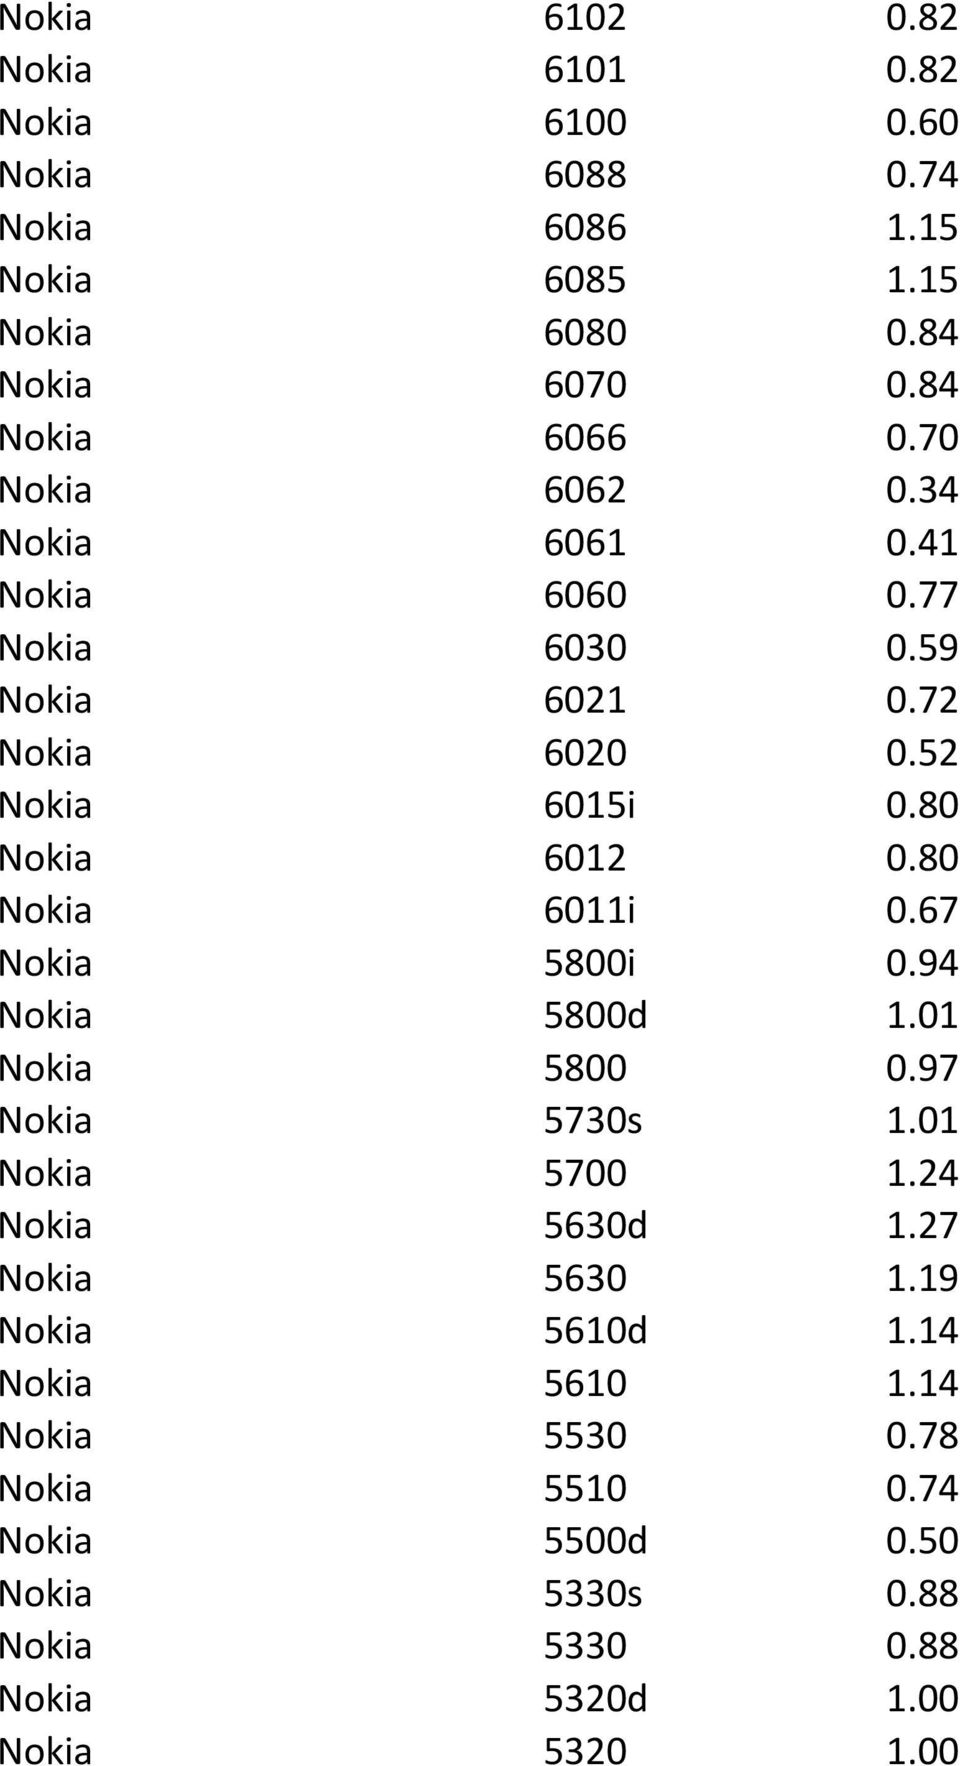 80 Nokia 6012 0.80 Nokia 6011i 0.67 Nokia 5800i 0.94 Nokia 5800d 1.01 Nokia 5800 0.97 Nokia 5730s 1.01 Nokia 5700 1.24 Nokia 5630d 1.